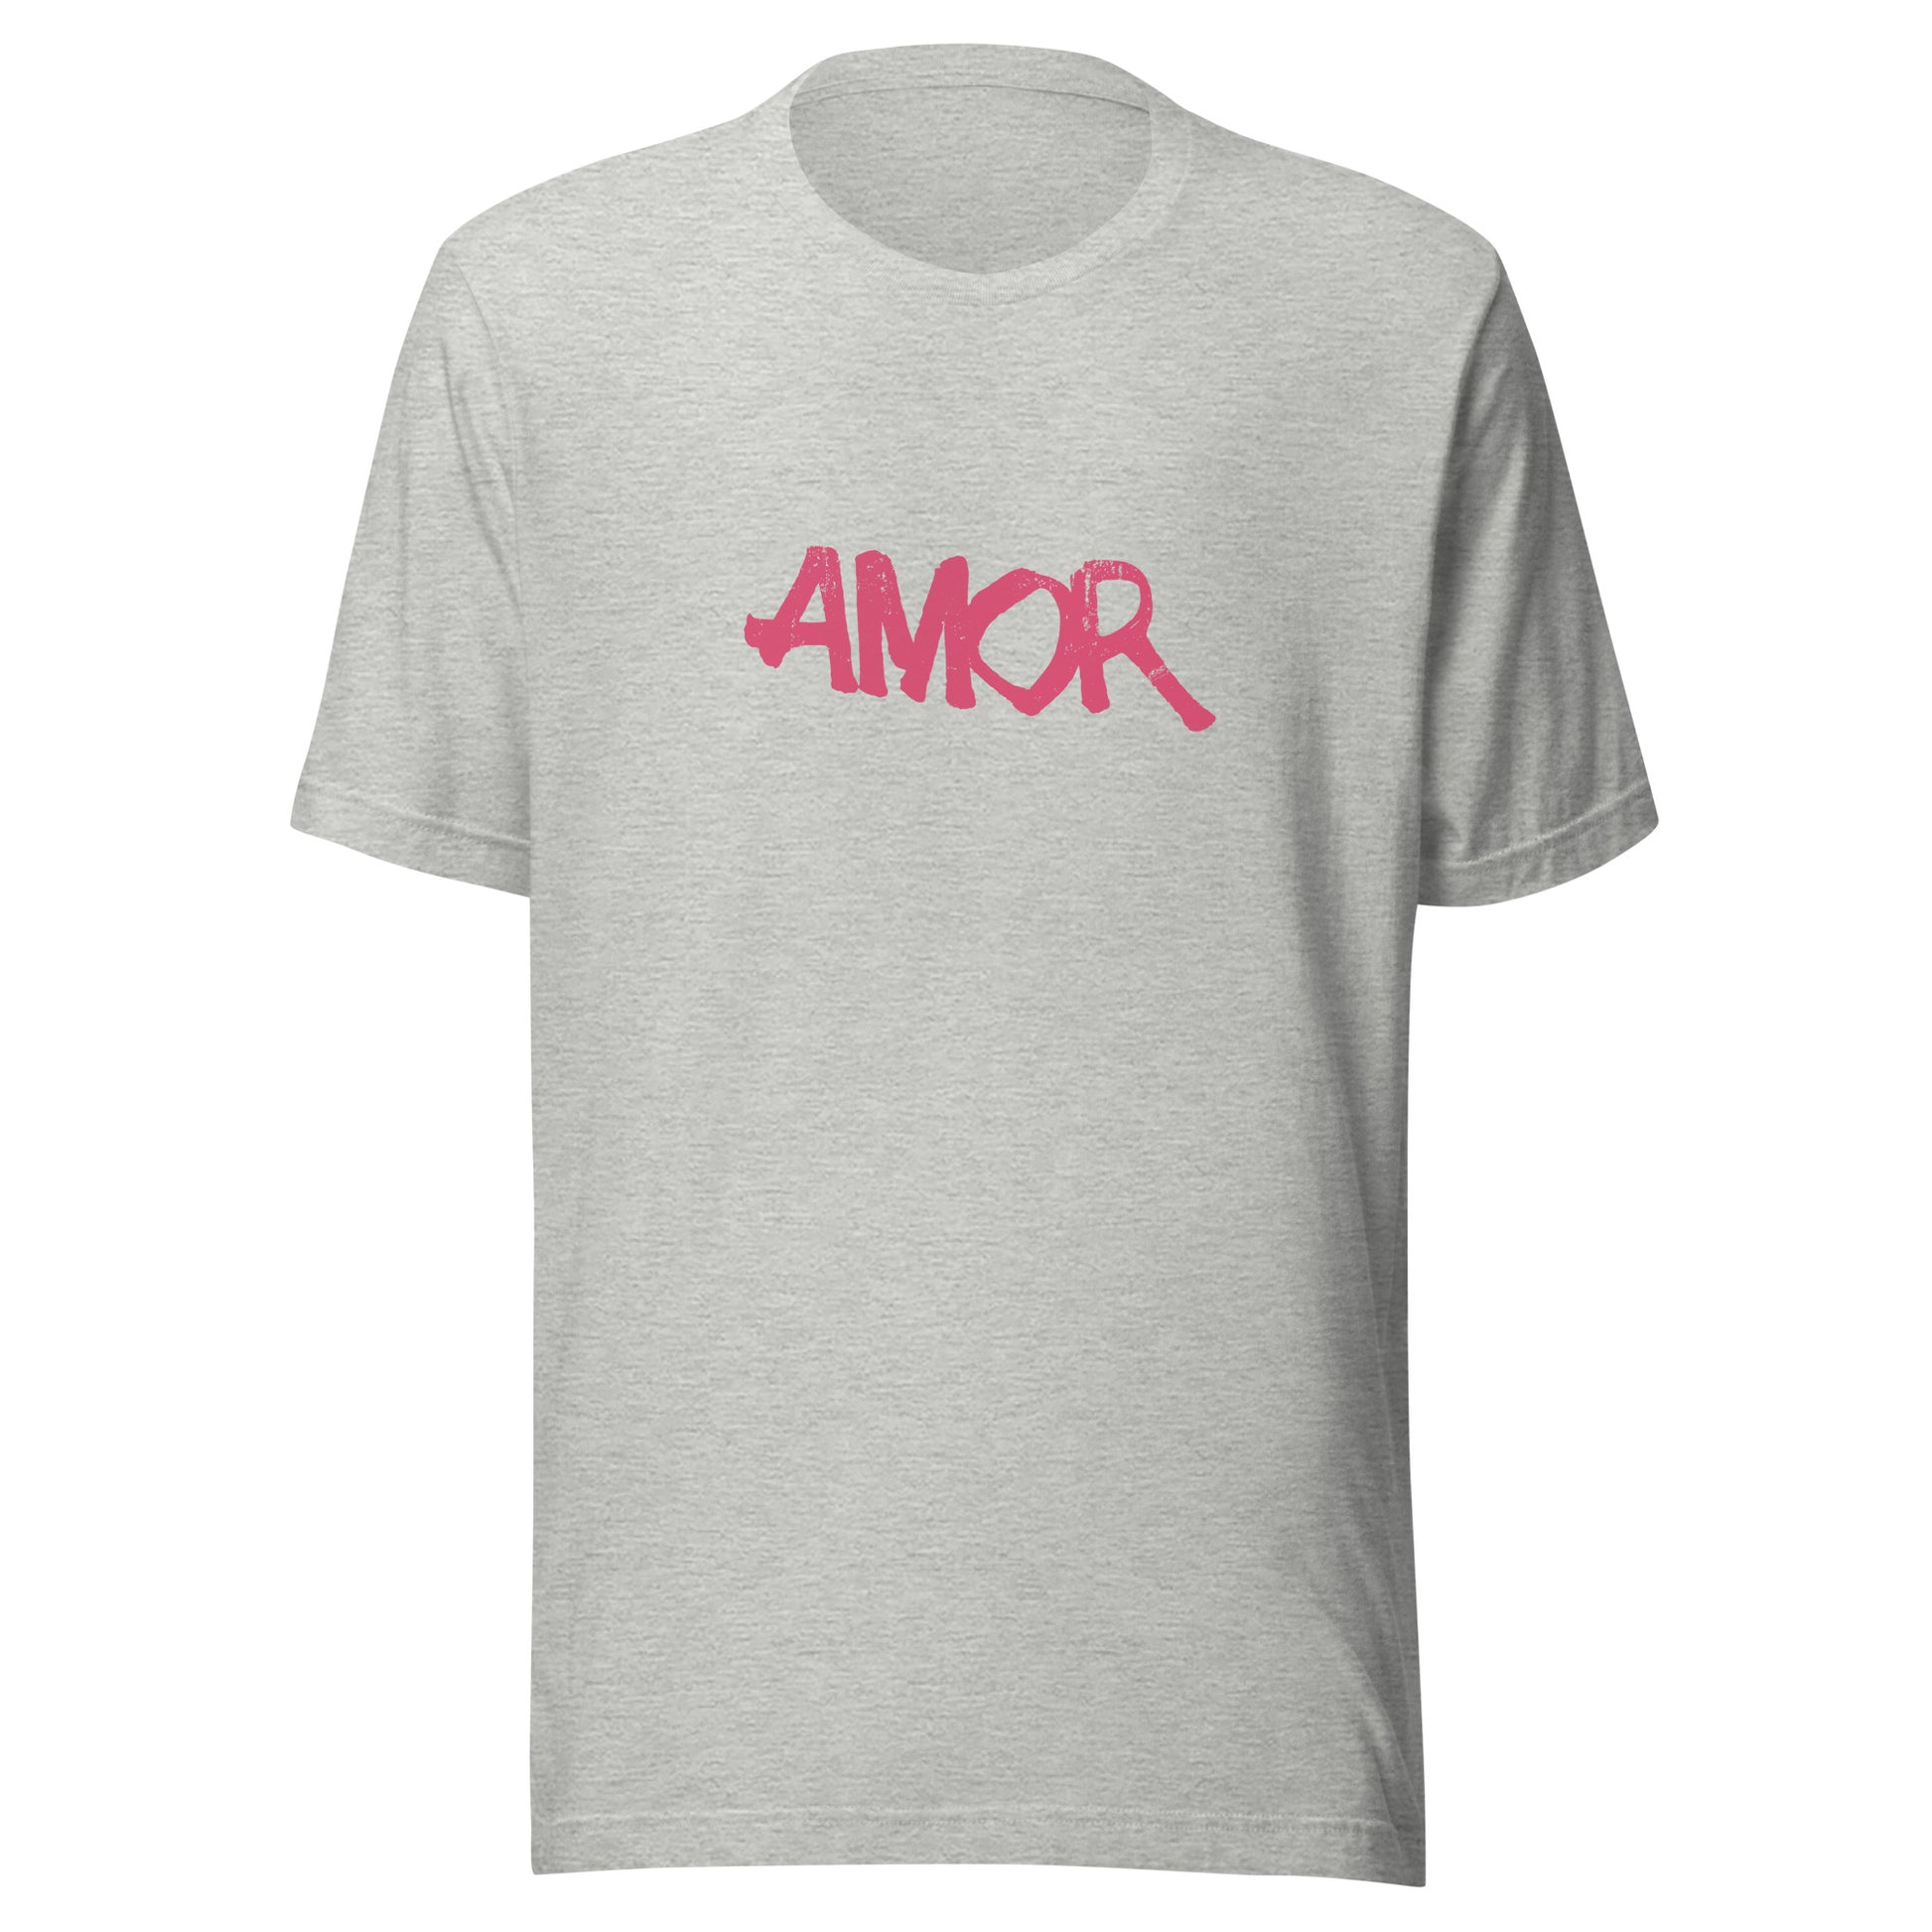 Amor T-Shirt | Art in Aging